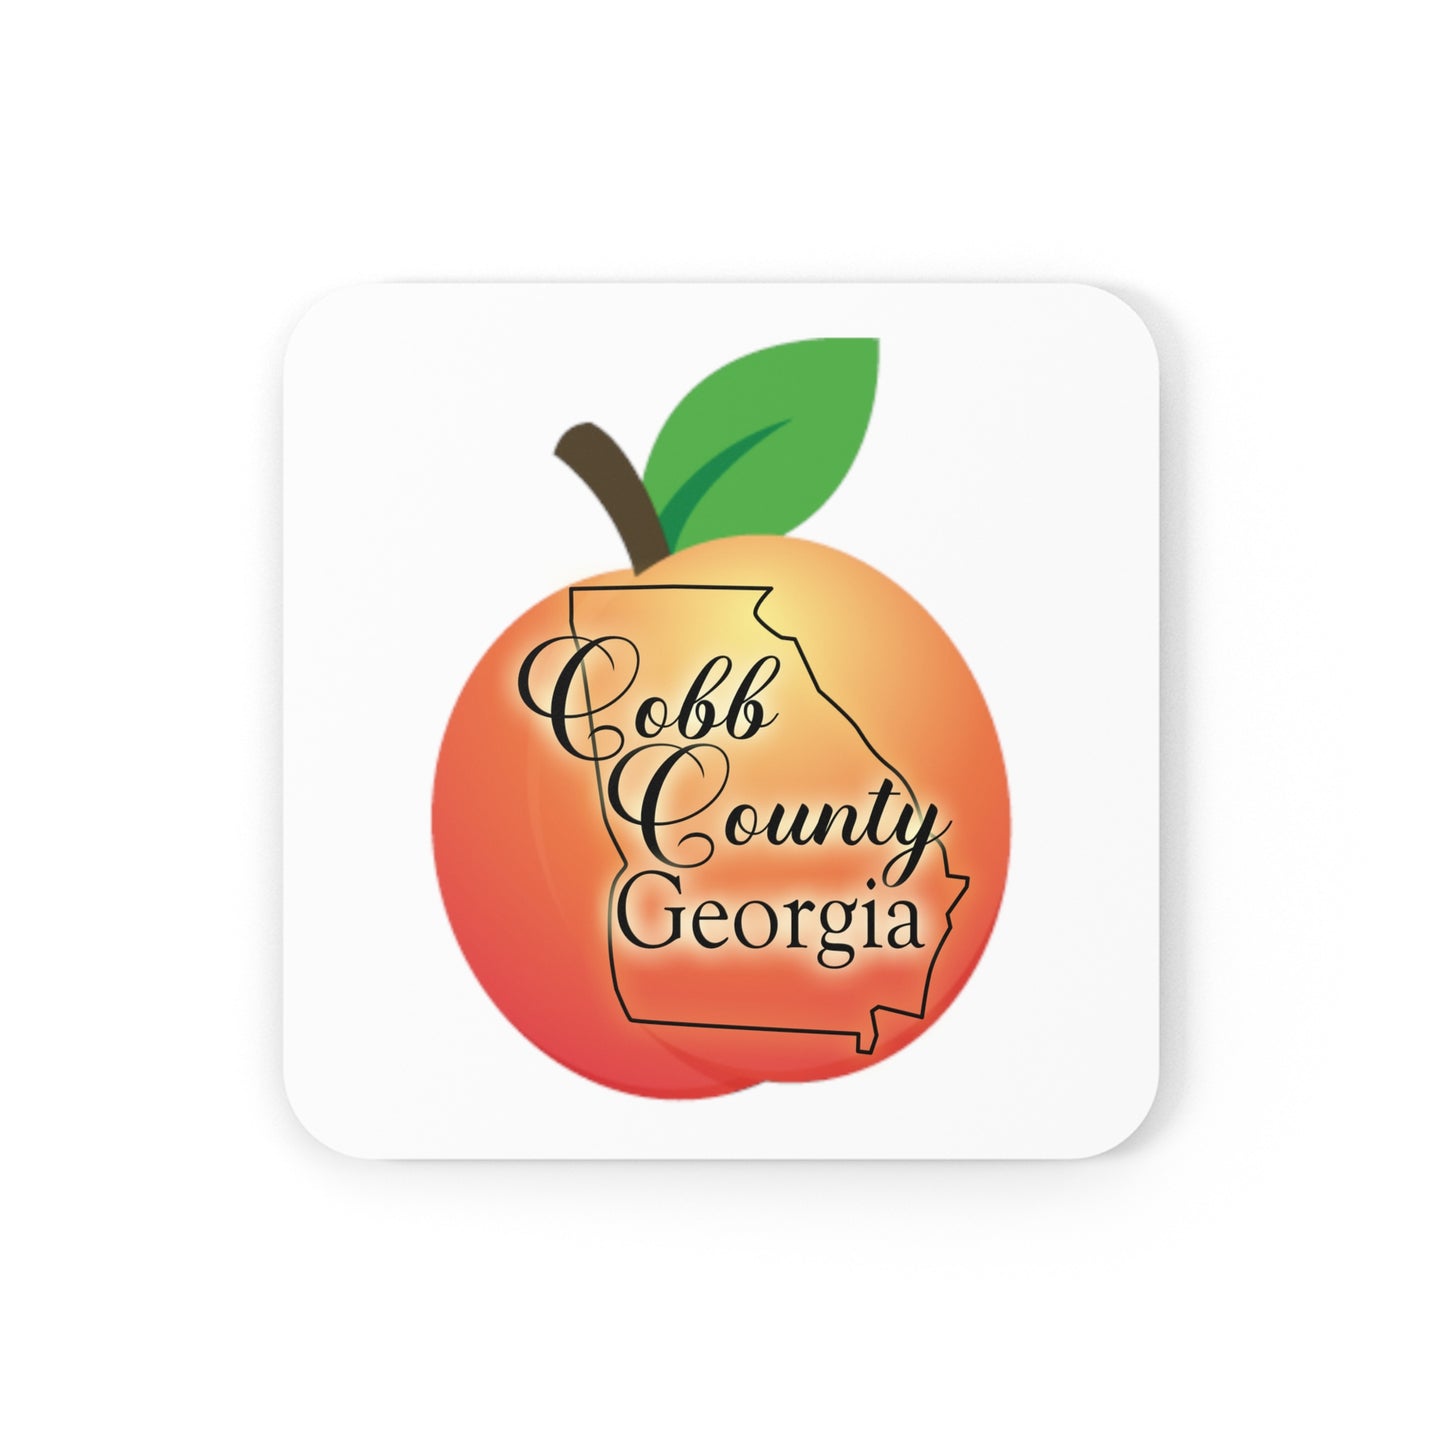 Cobb County Georgia Corkwood Coaster Set